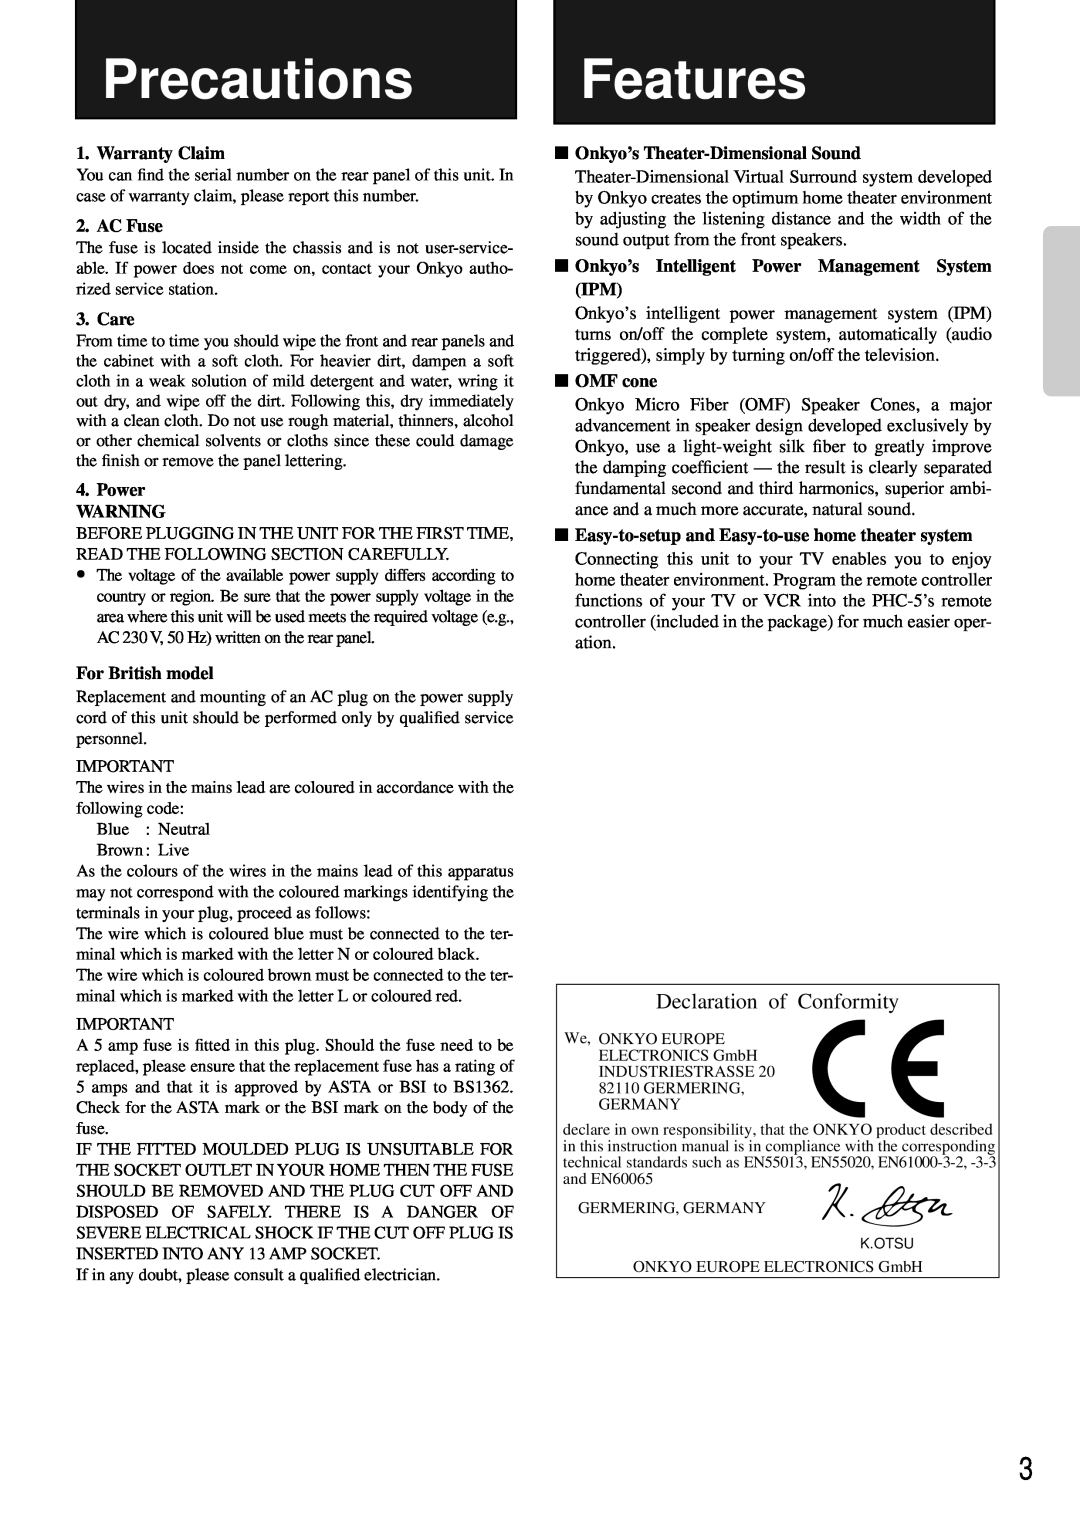 Onkyo PHC-5 Precautions, Features, Declaration of Conformity, Warranty Claim, AC Fuse, Care, Power, For British model 